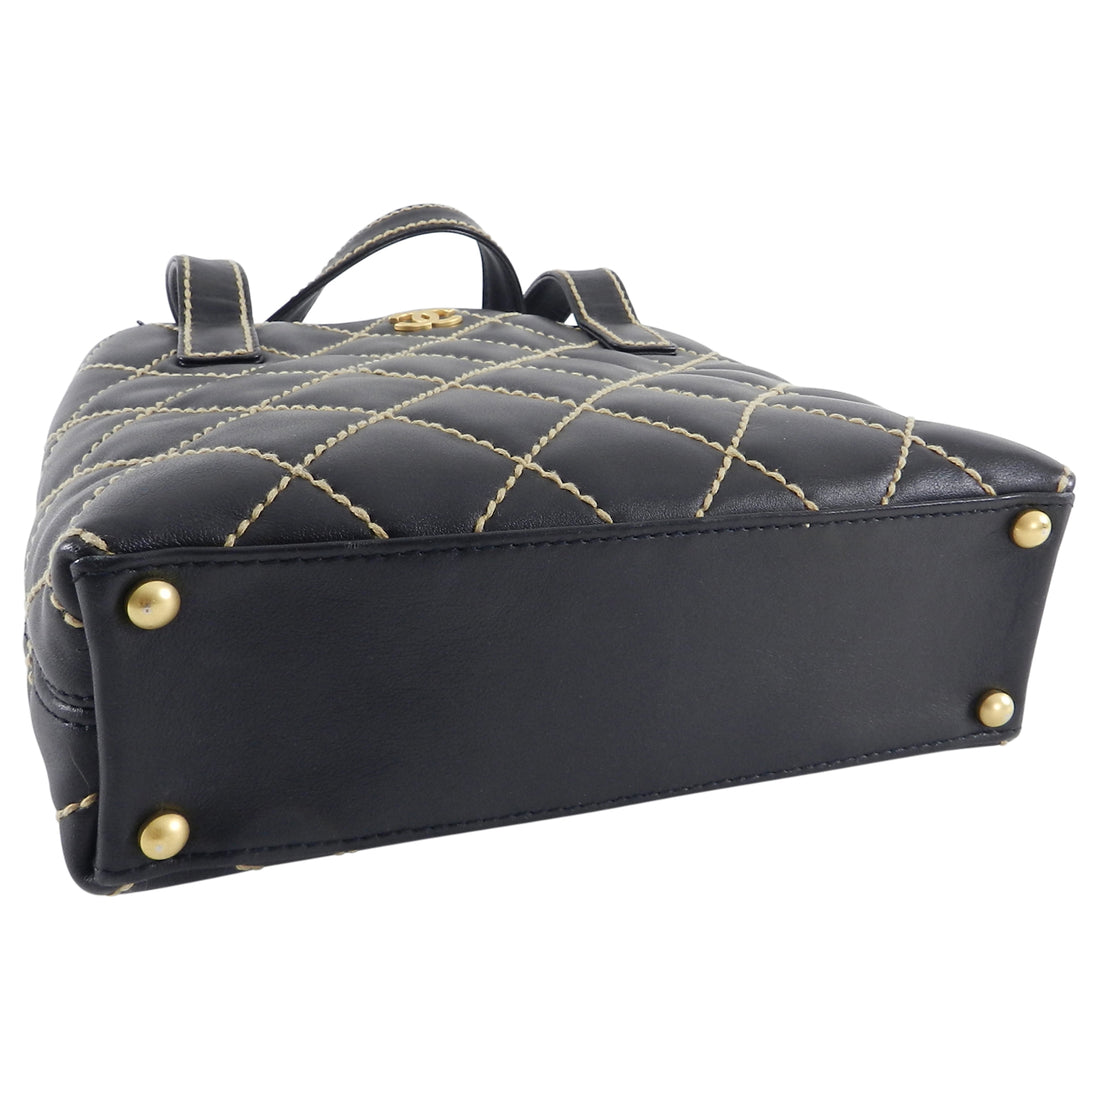 A Chanel Wild Stitch top clasp handbag, circa 2000 - 2002, the black  calfskin leather bag with class